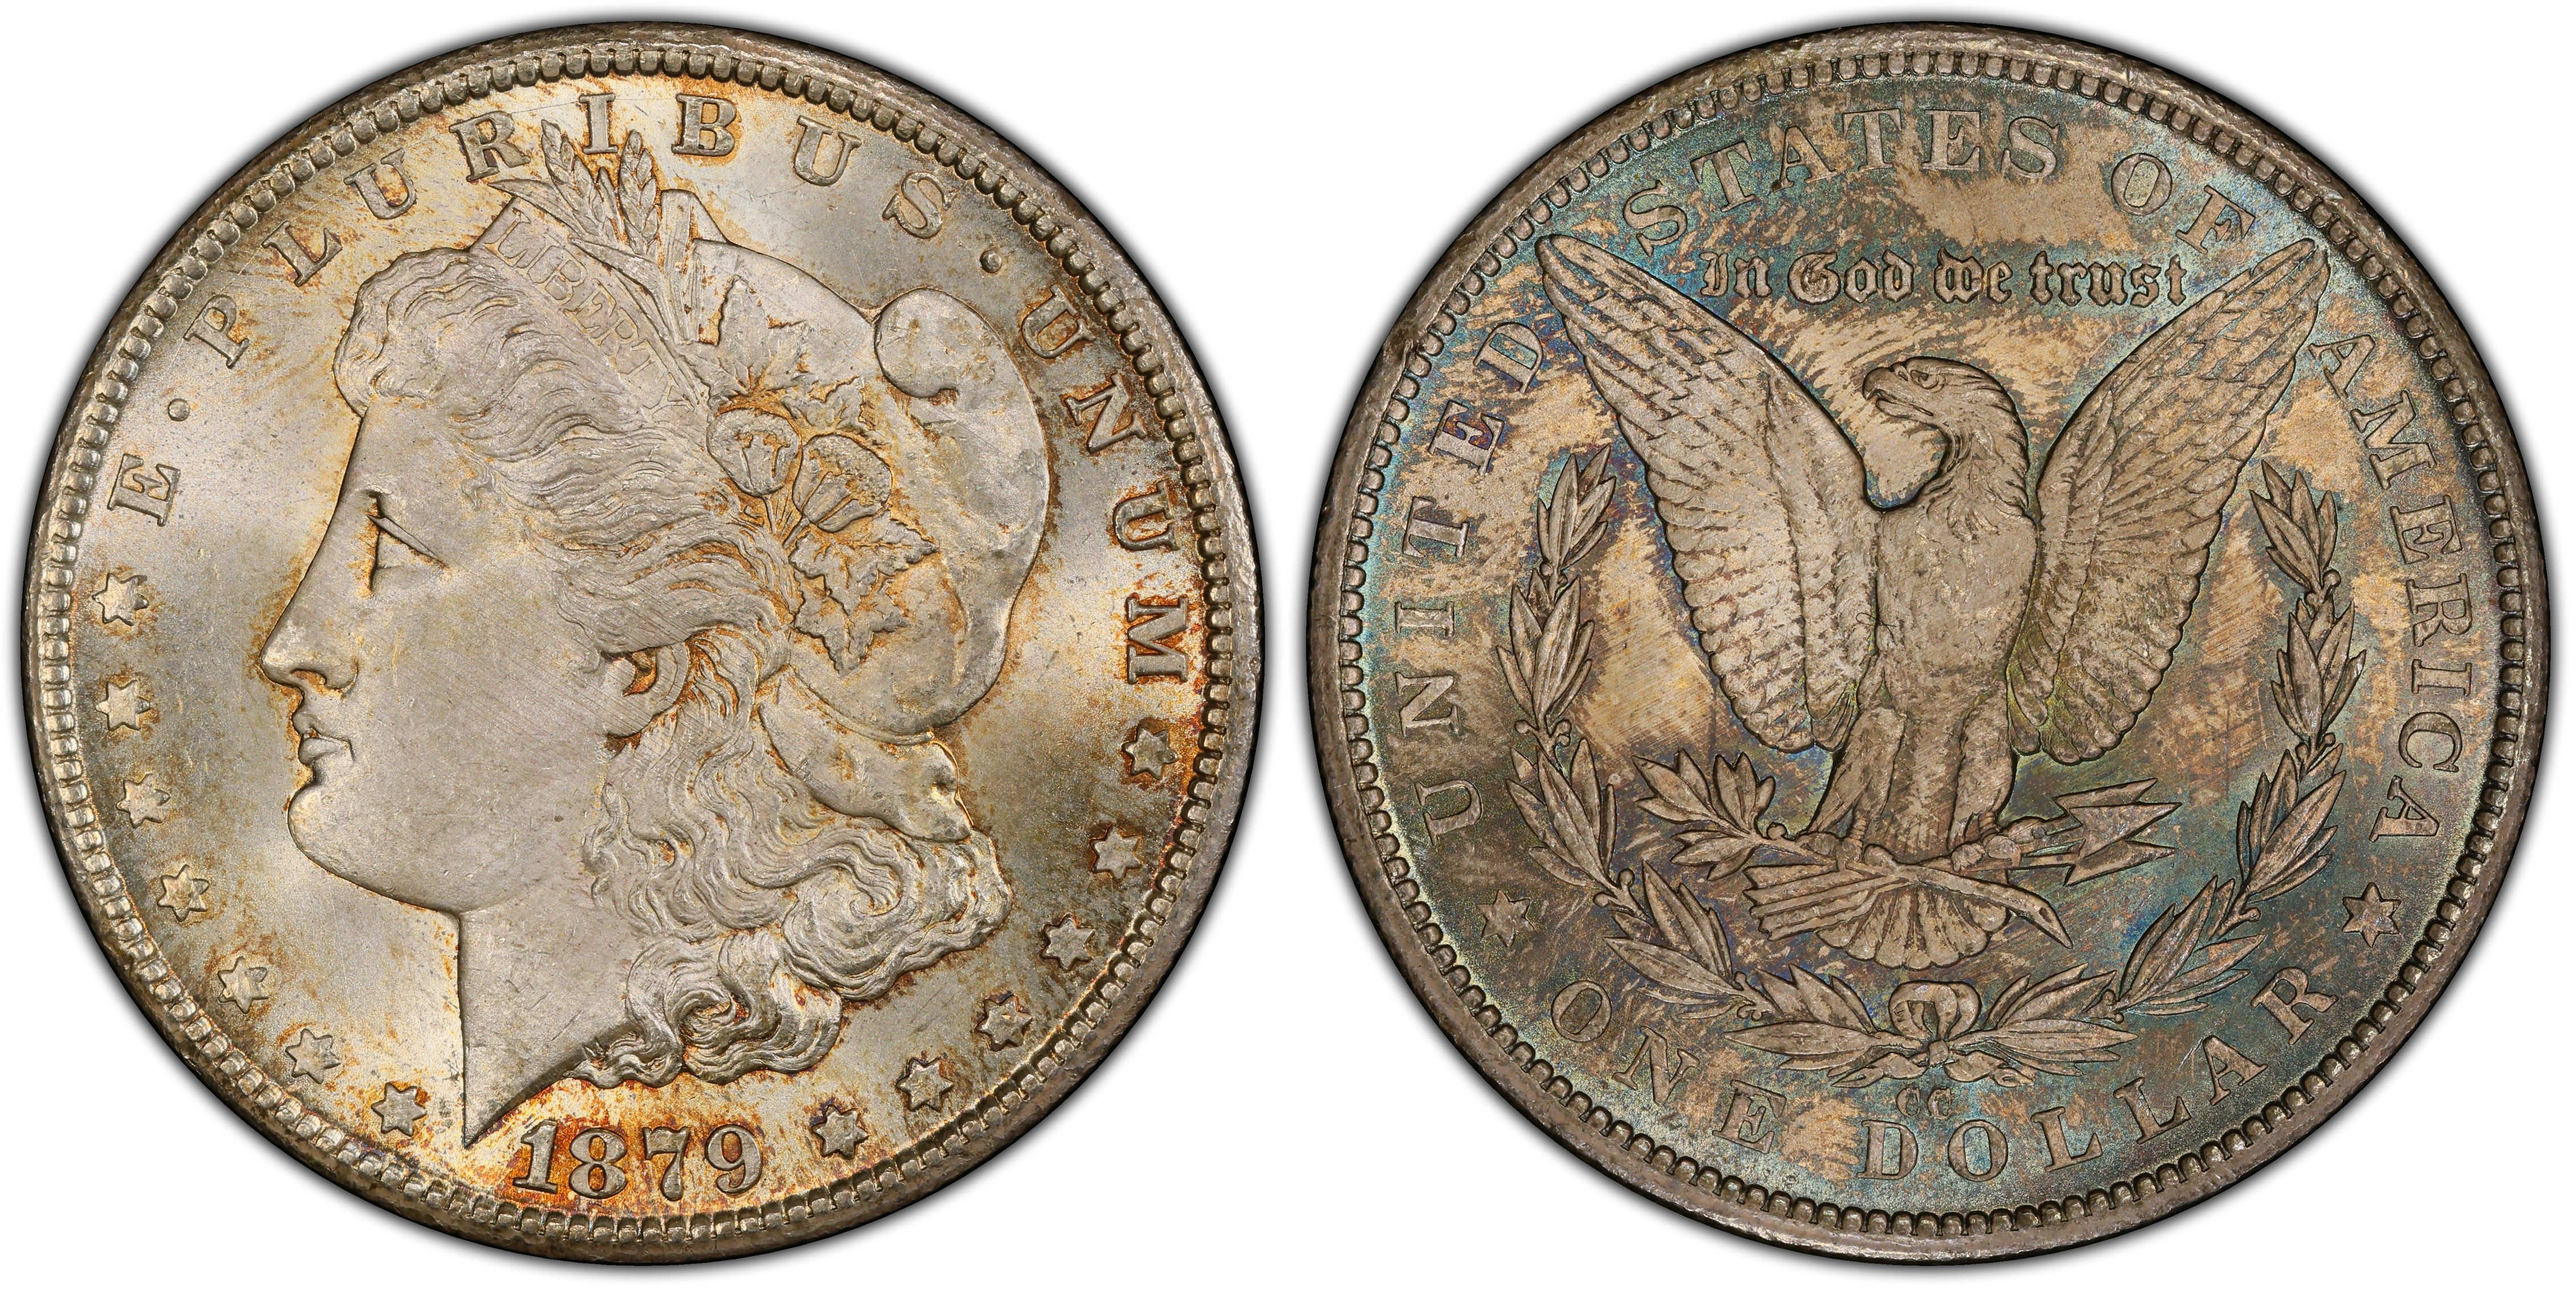 1879-CC $1 VAM 3 Capped Die (Regular Strike) Morgan Dollar - PCGS